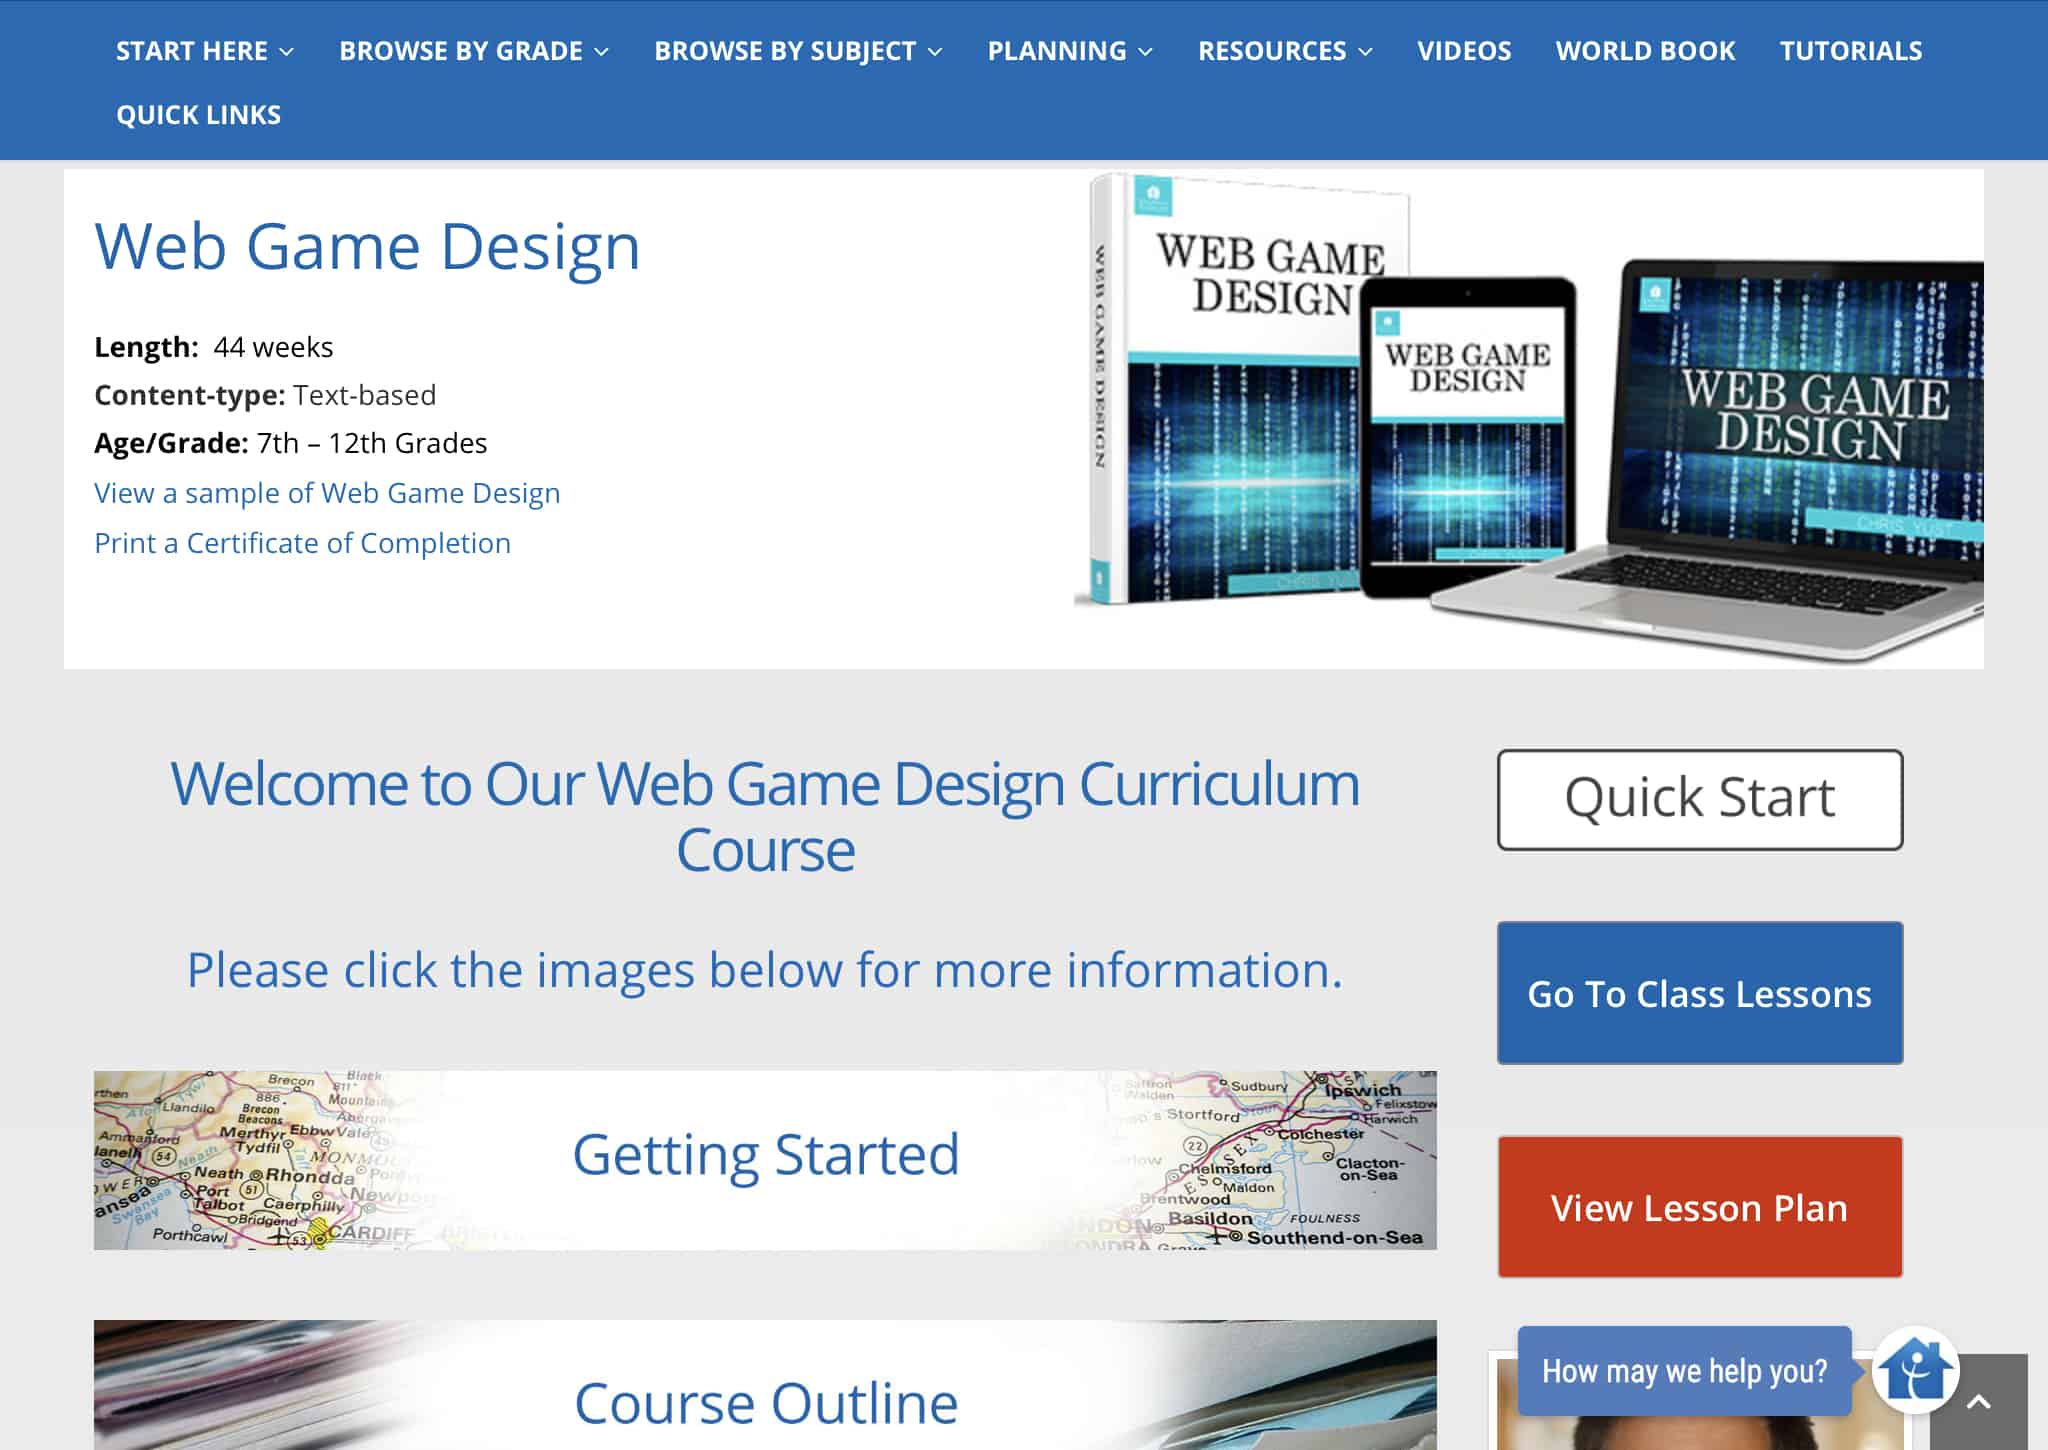 Web Game Design Course Curriculum homeschool